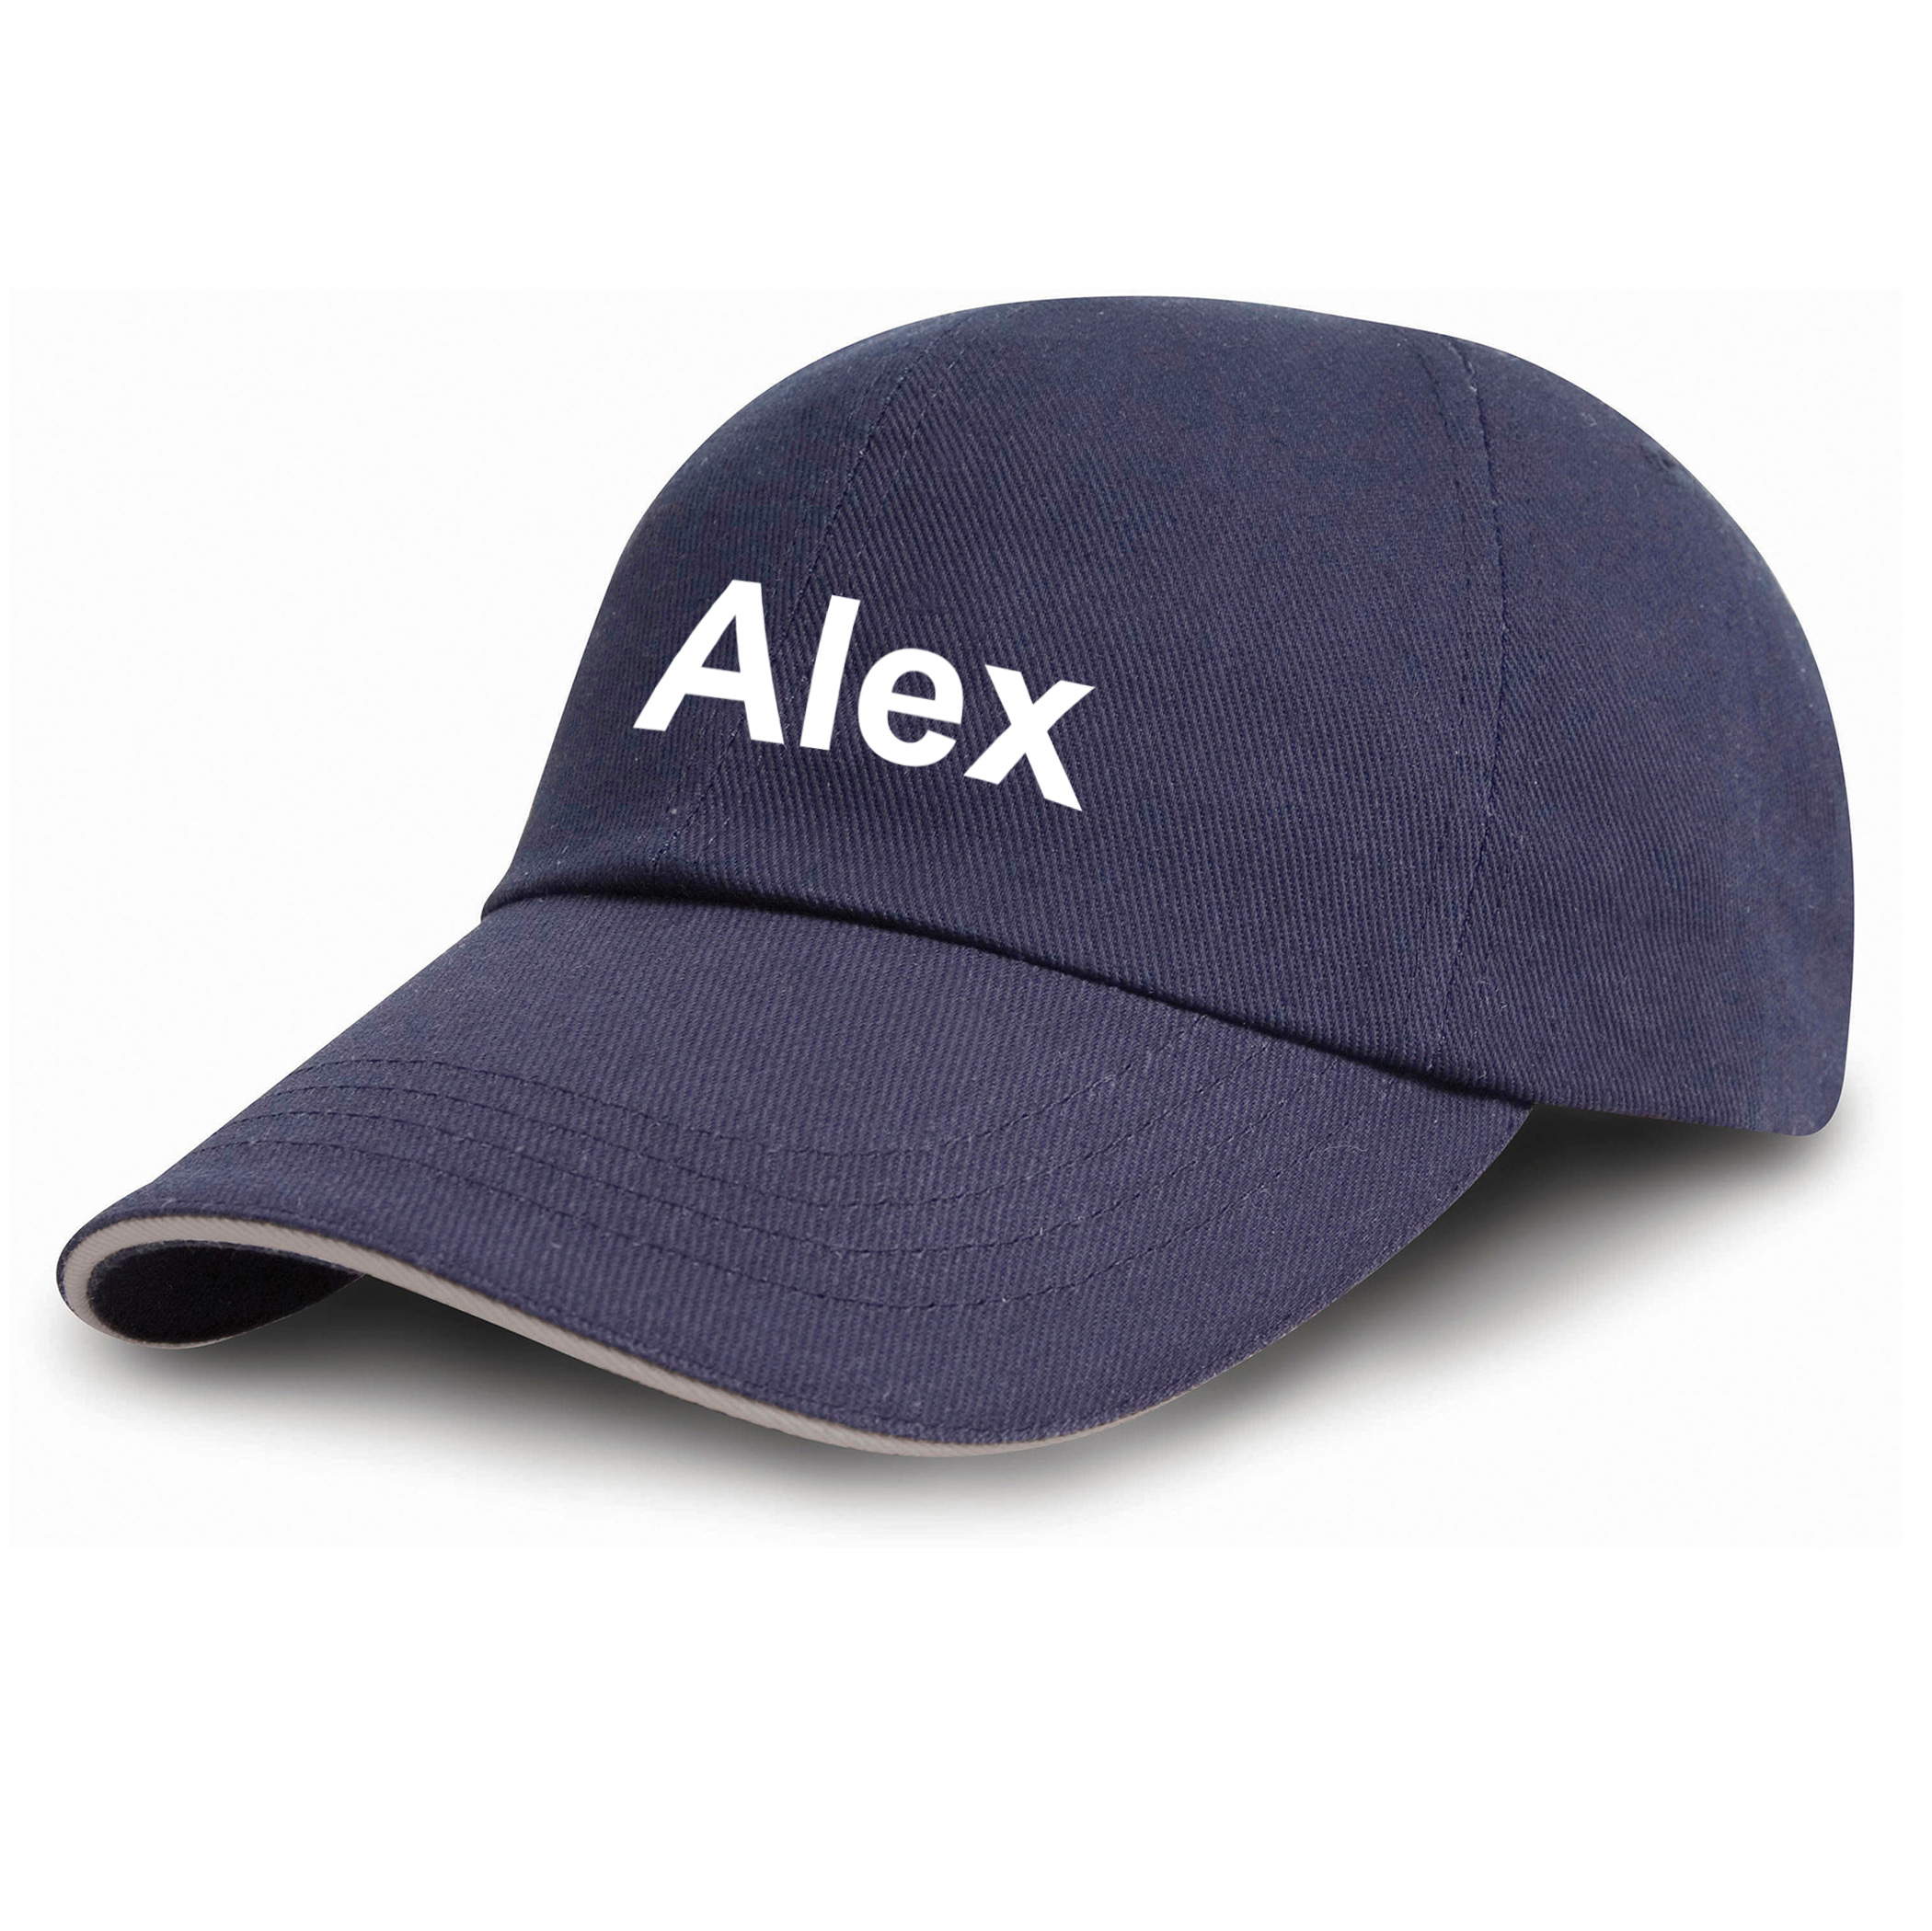 Baseball-Cap mit Namen | Bekleidung mit | Namen Geschenke